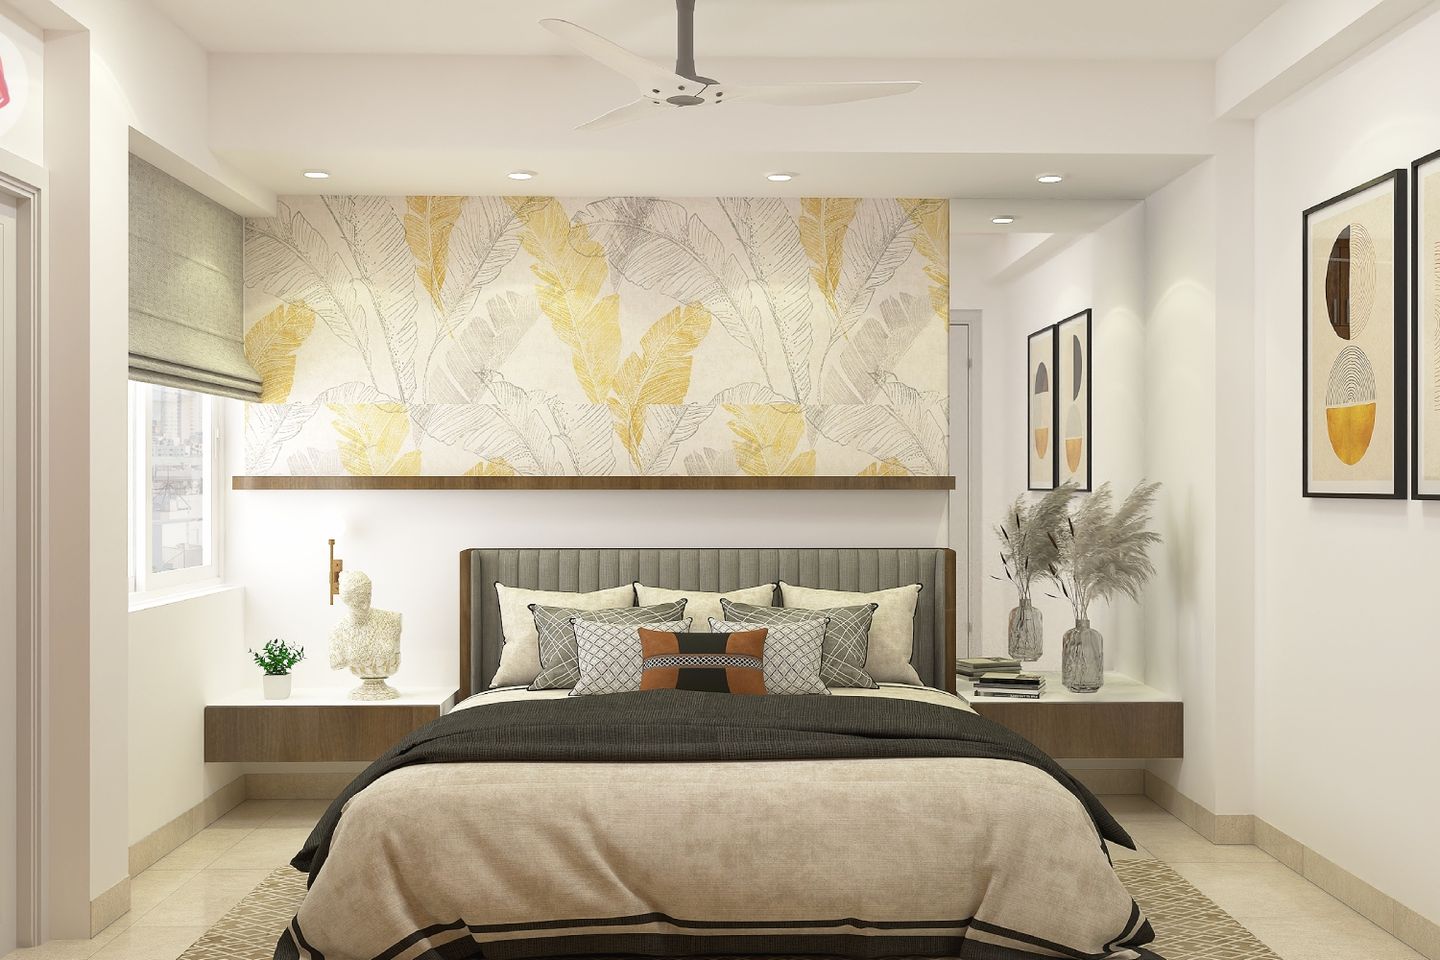 Master Bedroom Design With Leafy Wallpaper - Livspace